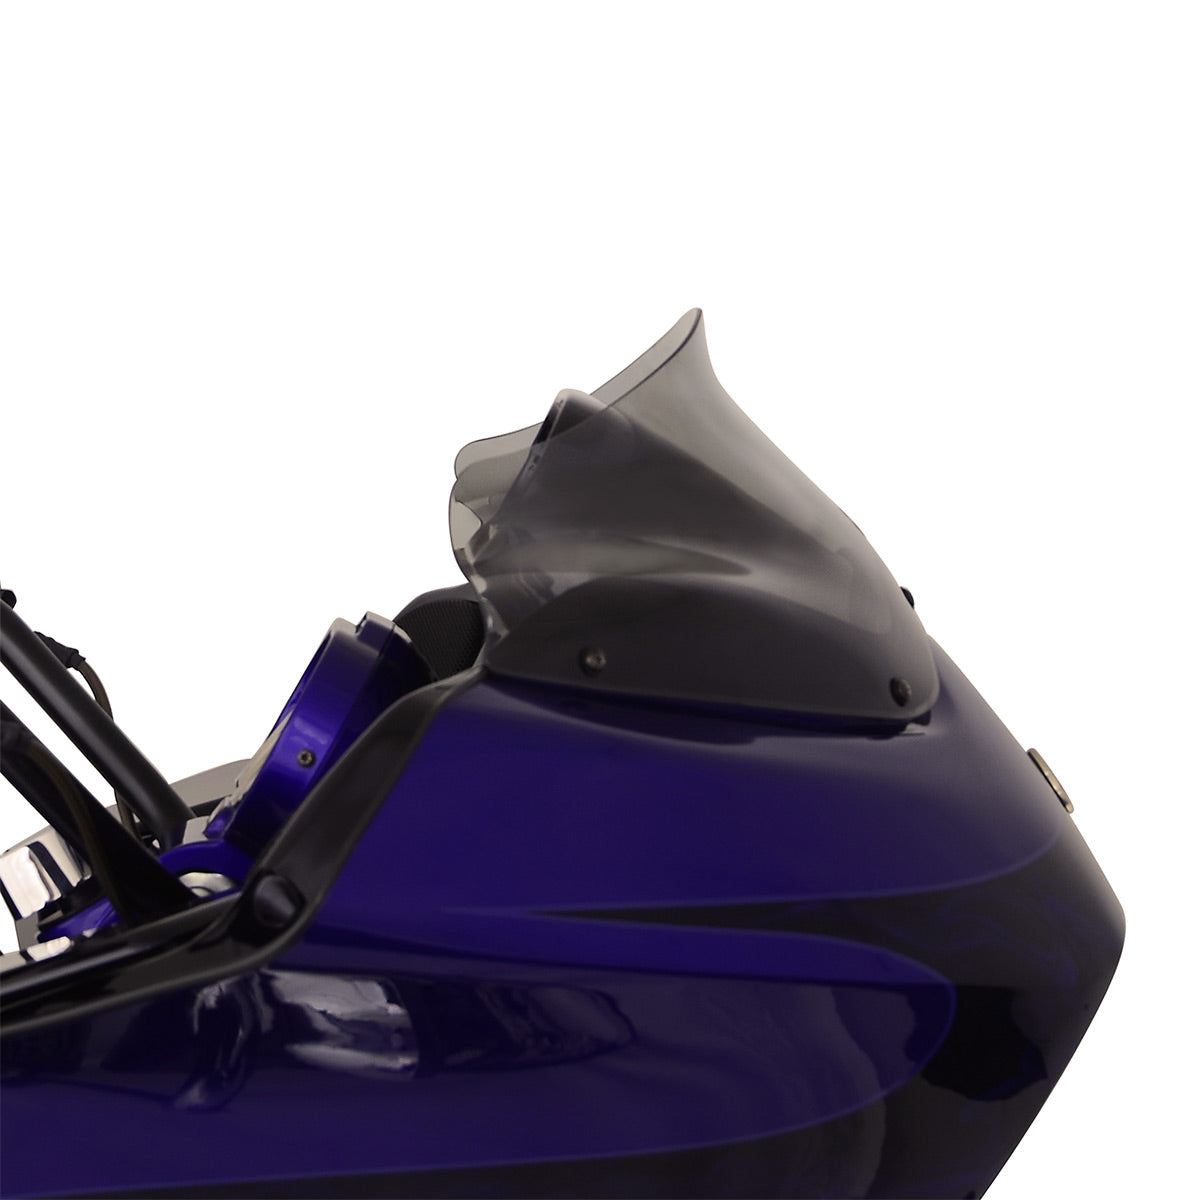 8" Sport Tint Flare™ Windshield for Harley-Davidson 1998-2013 Road Glide Motorcycle Models